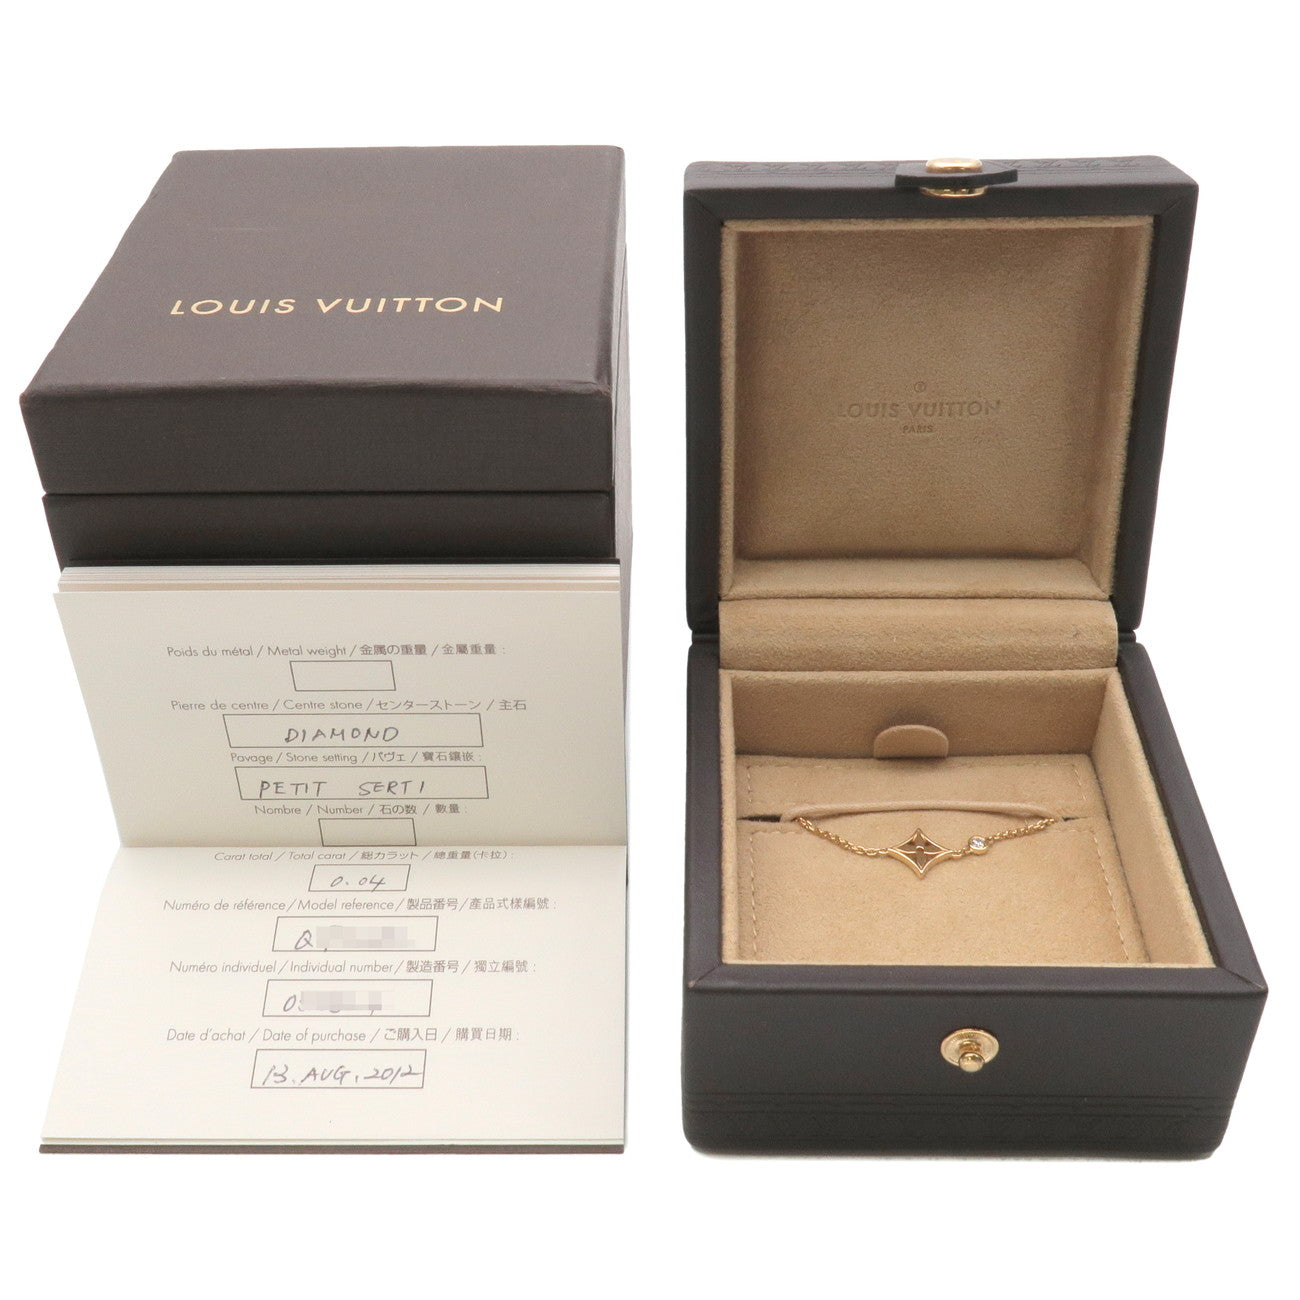 LOUIS VUITTON Earrings Idylle Blossom Diamond 750 K18 YG Yellow